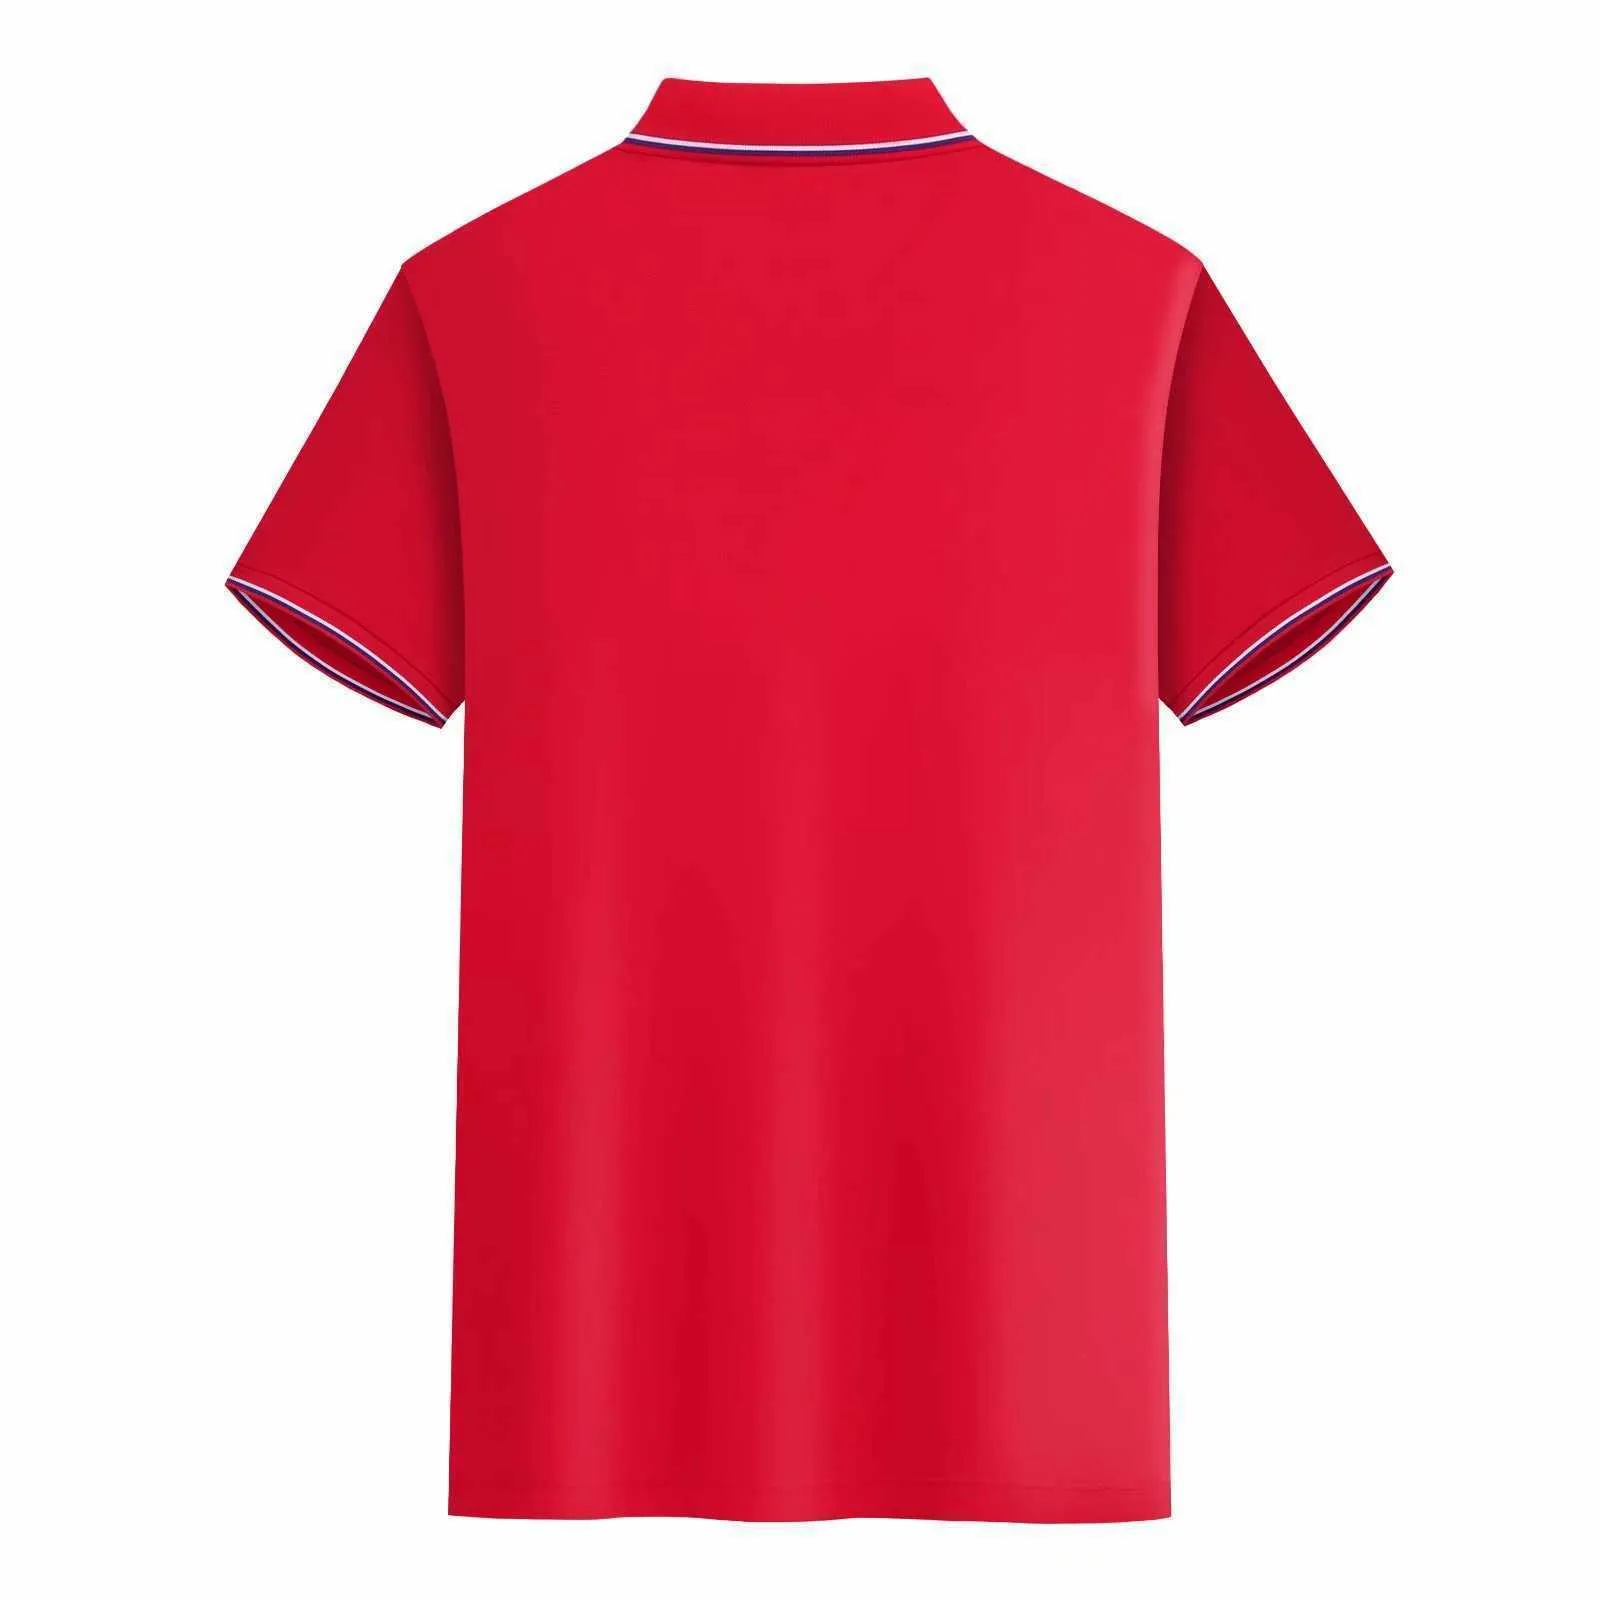 2021 2022 plain customization soccer jersey 21 22 training football shirt sports wear AAA902